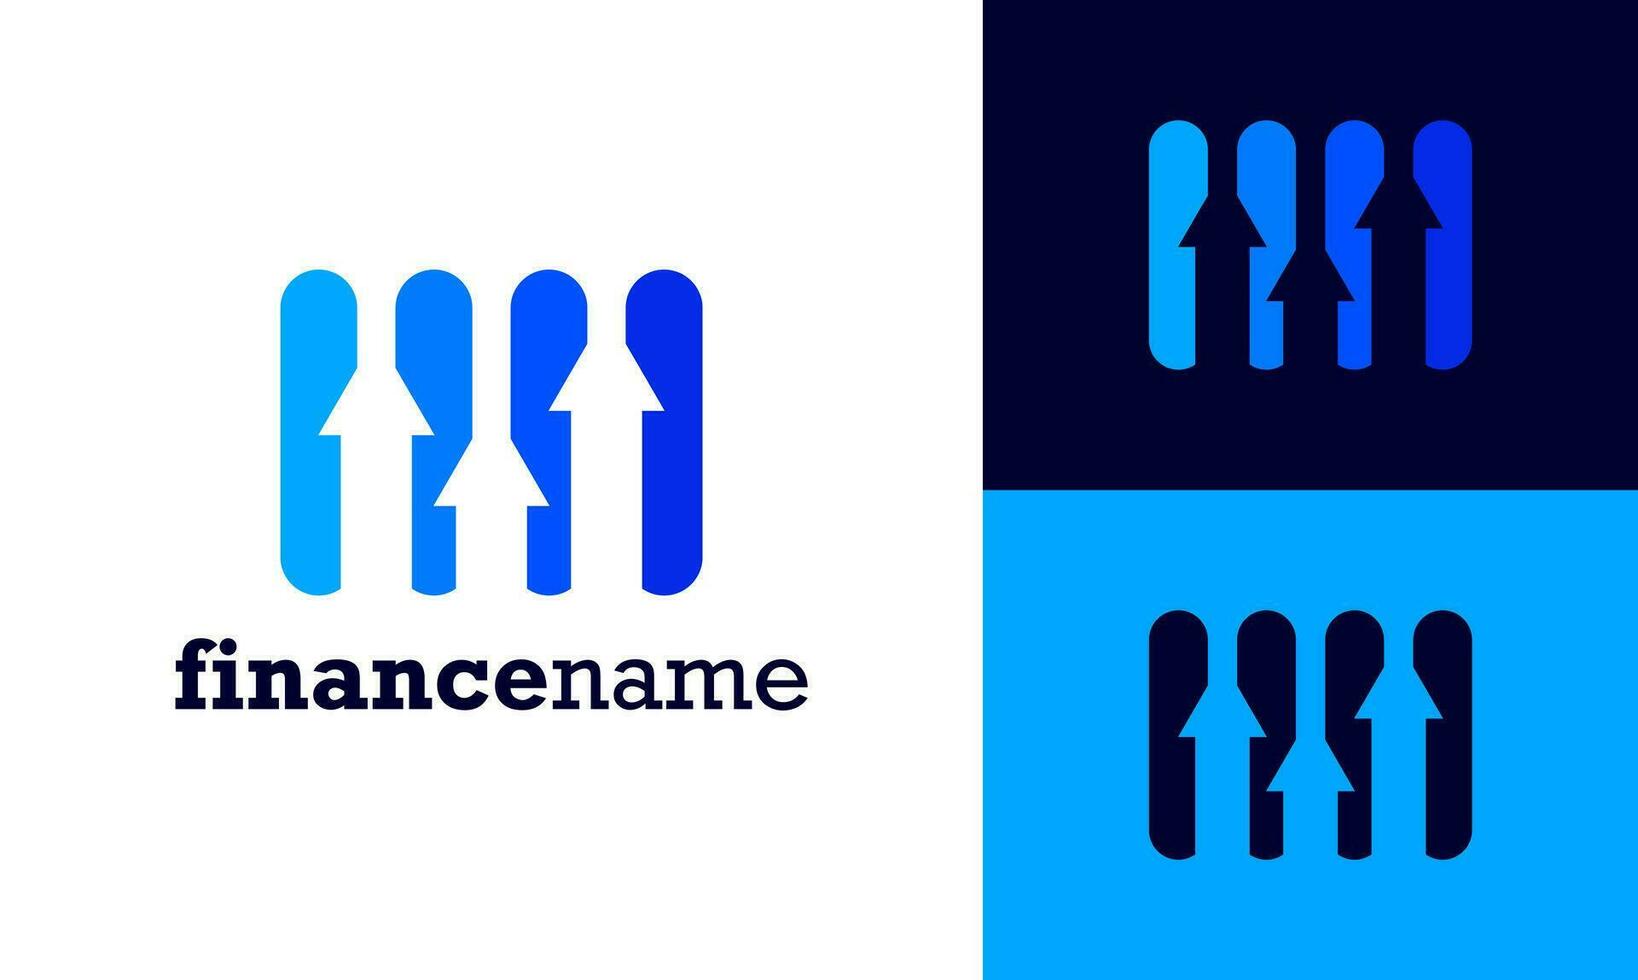 Simple illustration logo design for financial company. financial company logo design in blue color. vector